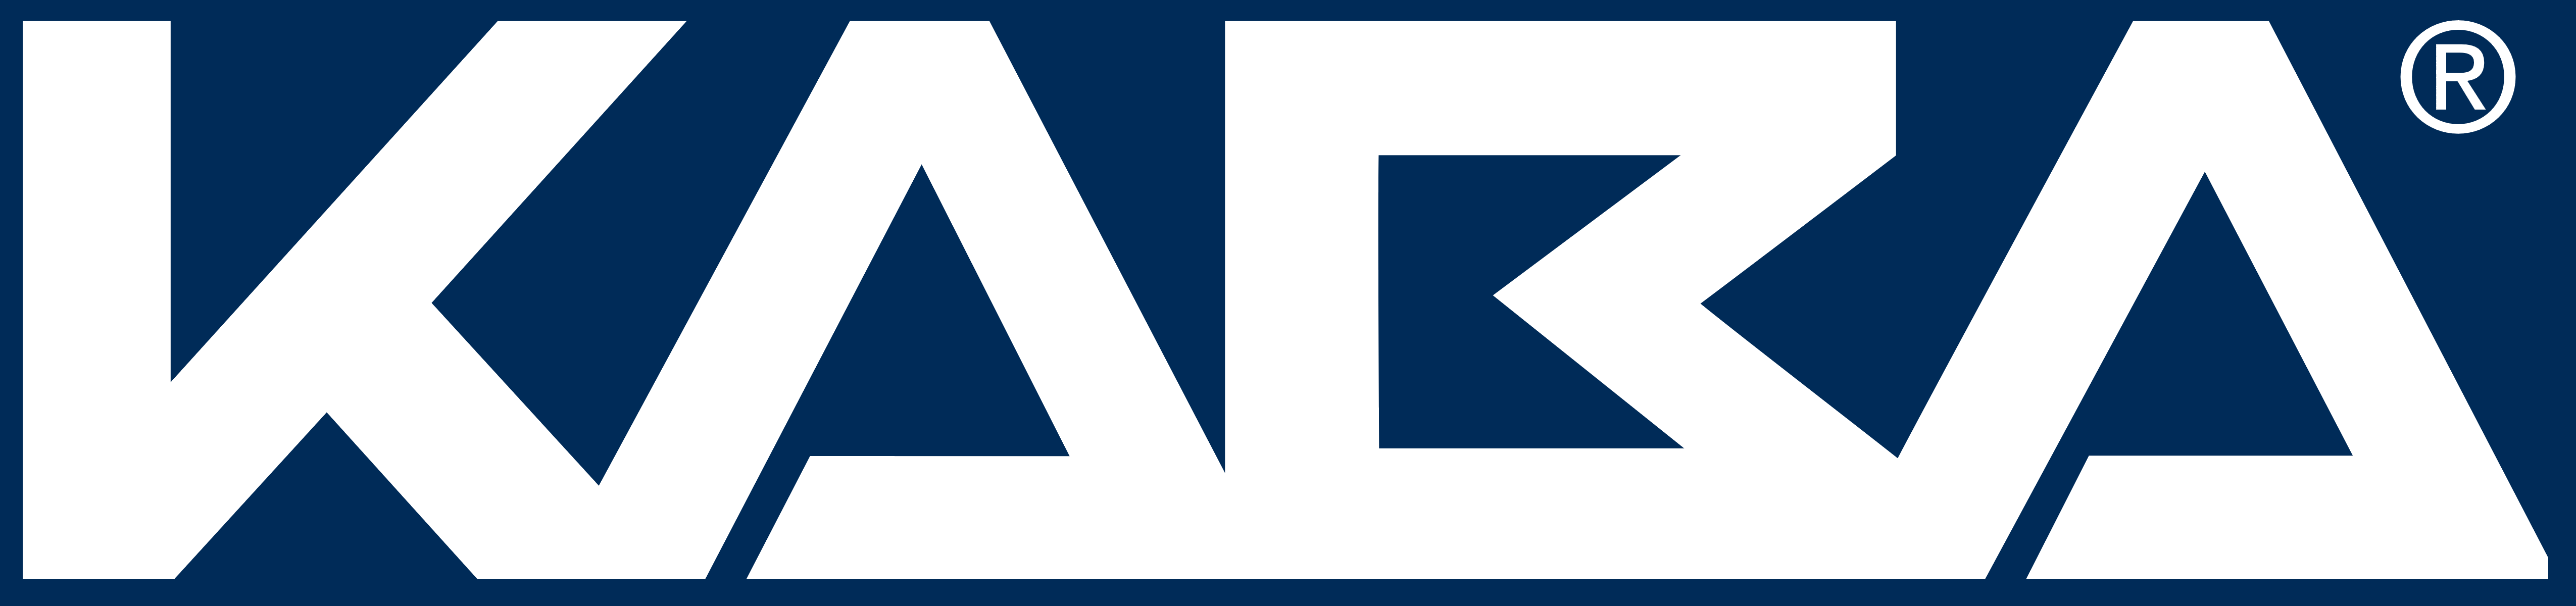 Kaba Logo - Kaba